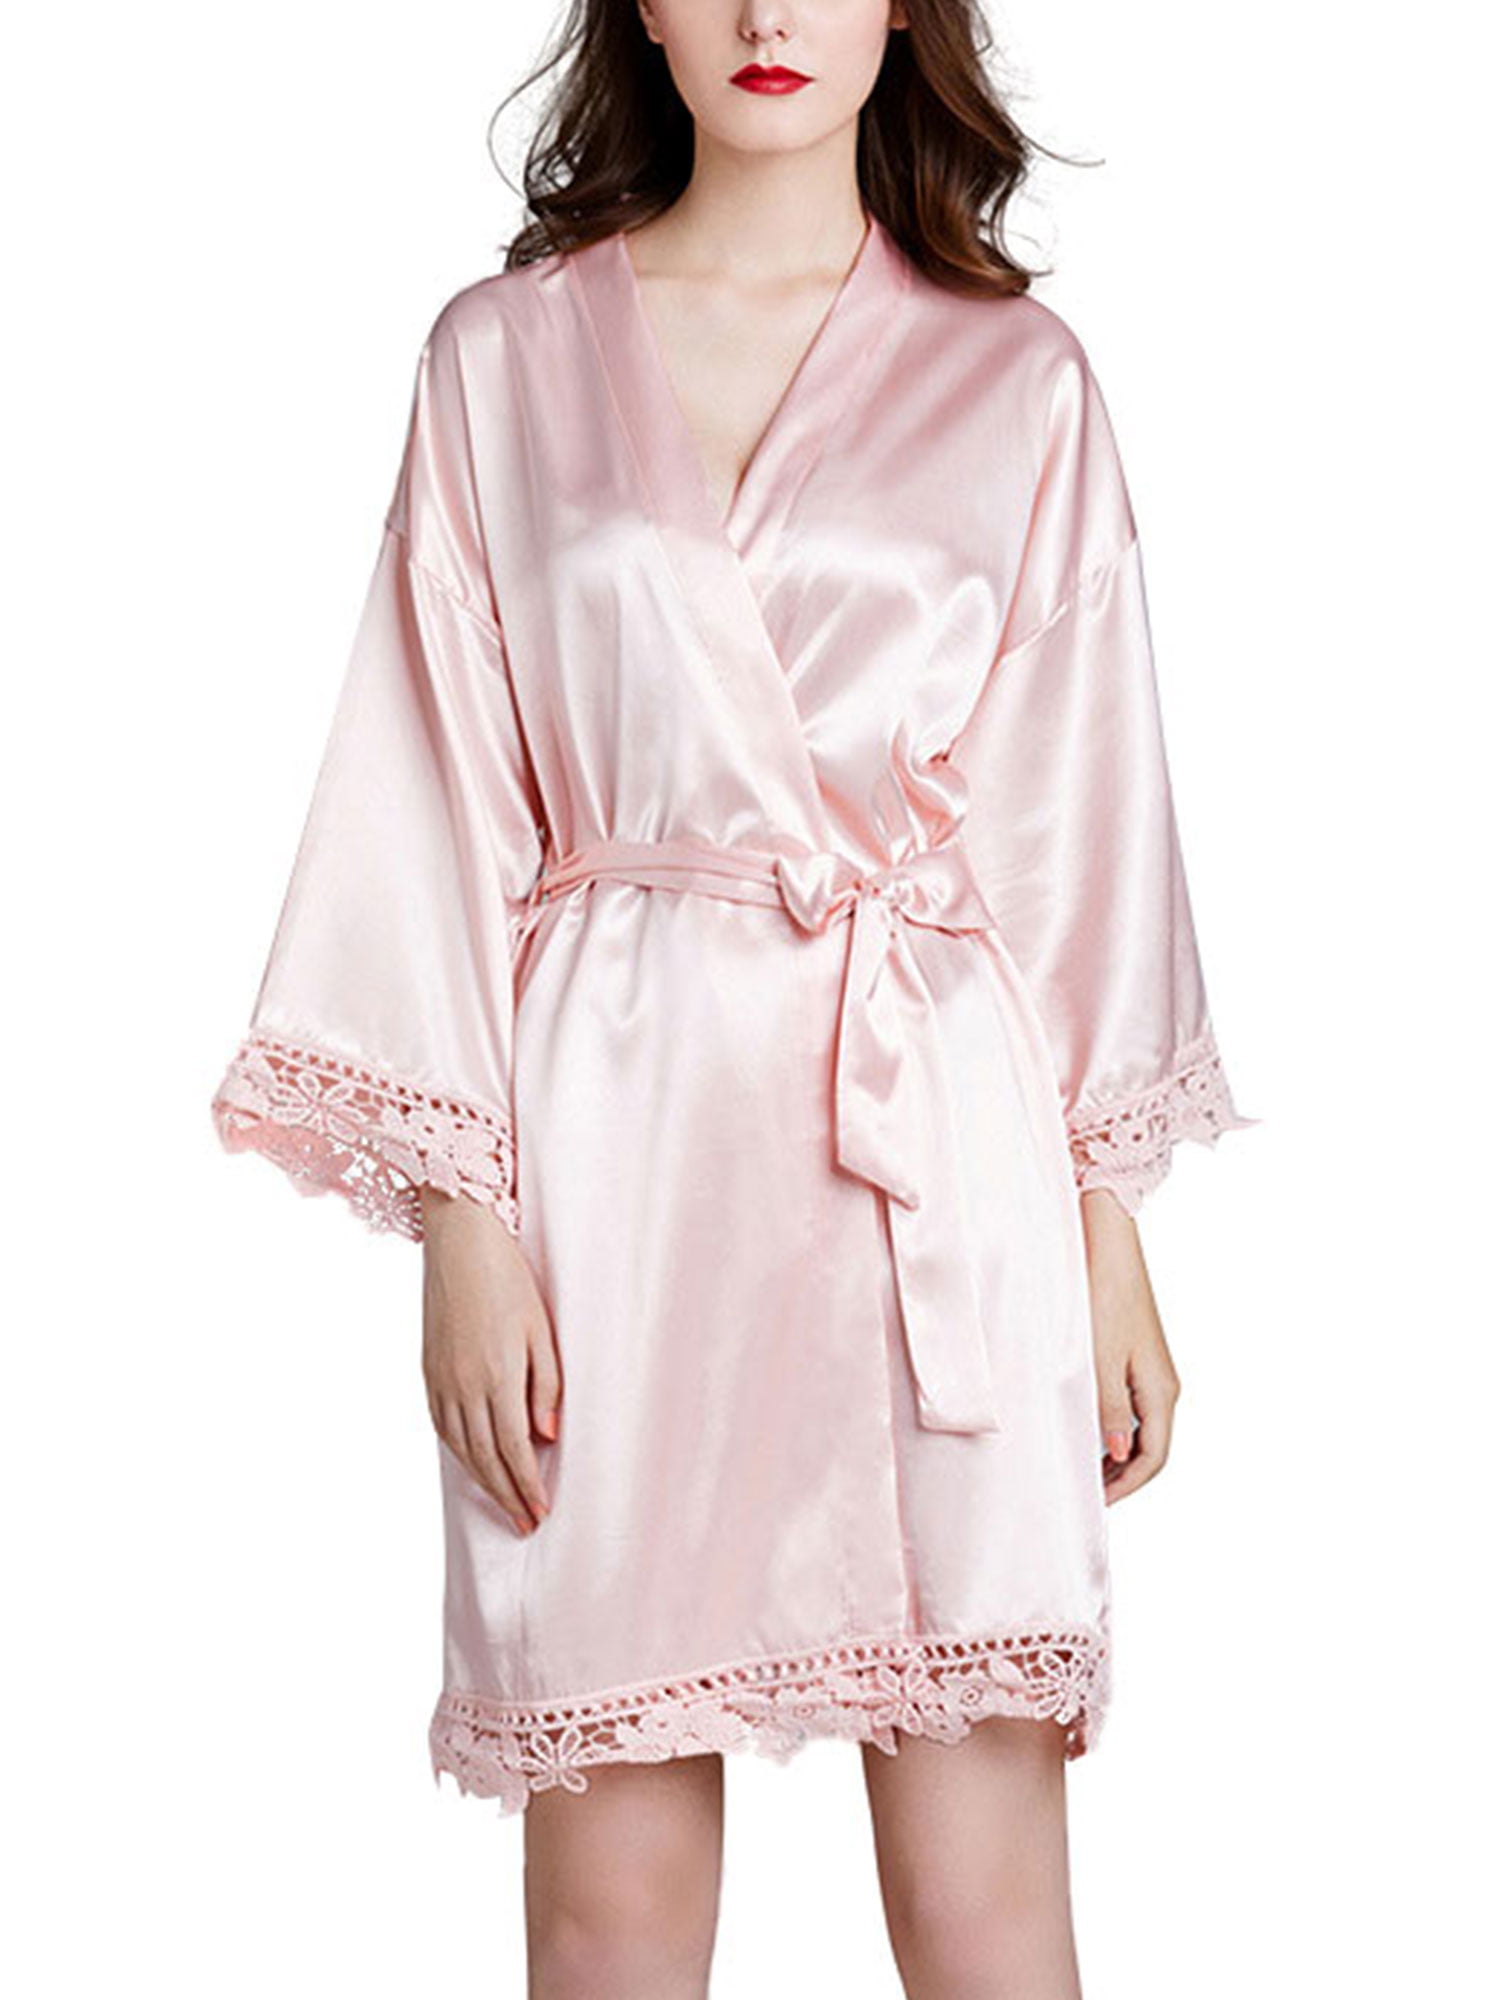 Womens Satin Robe,Womens Lace-Trimmed Satin Short Kimono Robe Bathrobe Loungewear